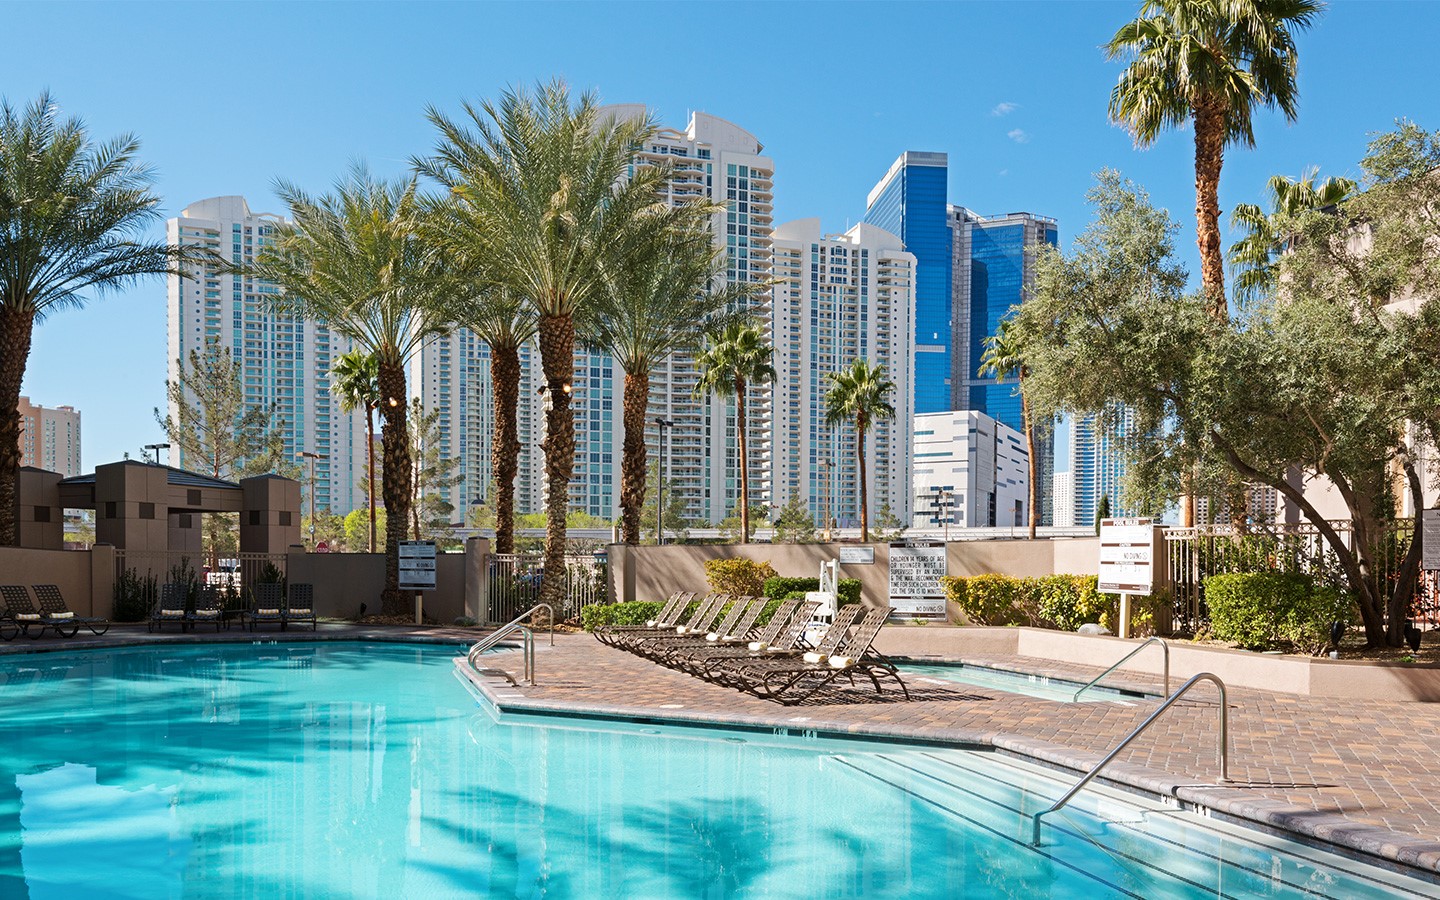 Hilton Las Vegas on Paradise Pool